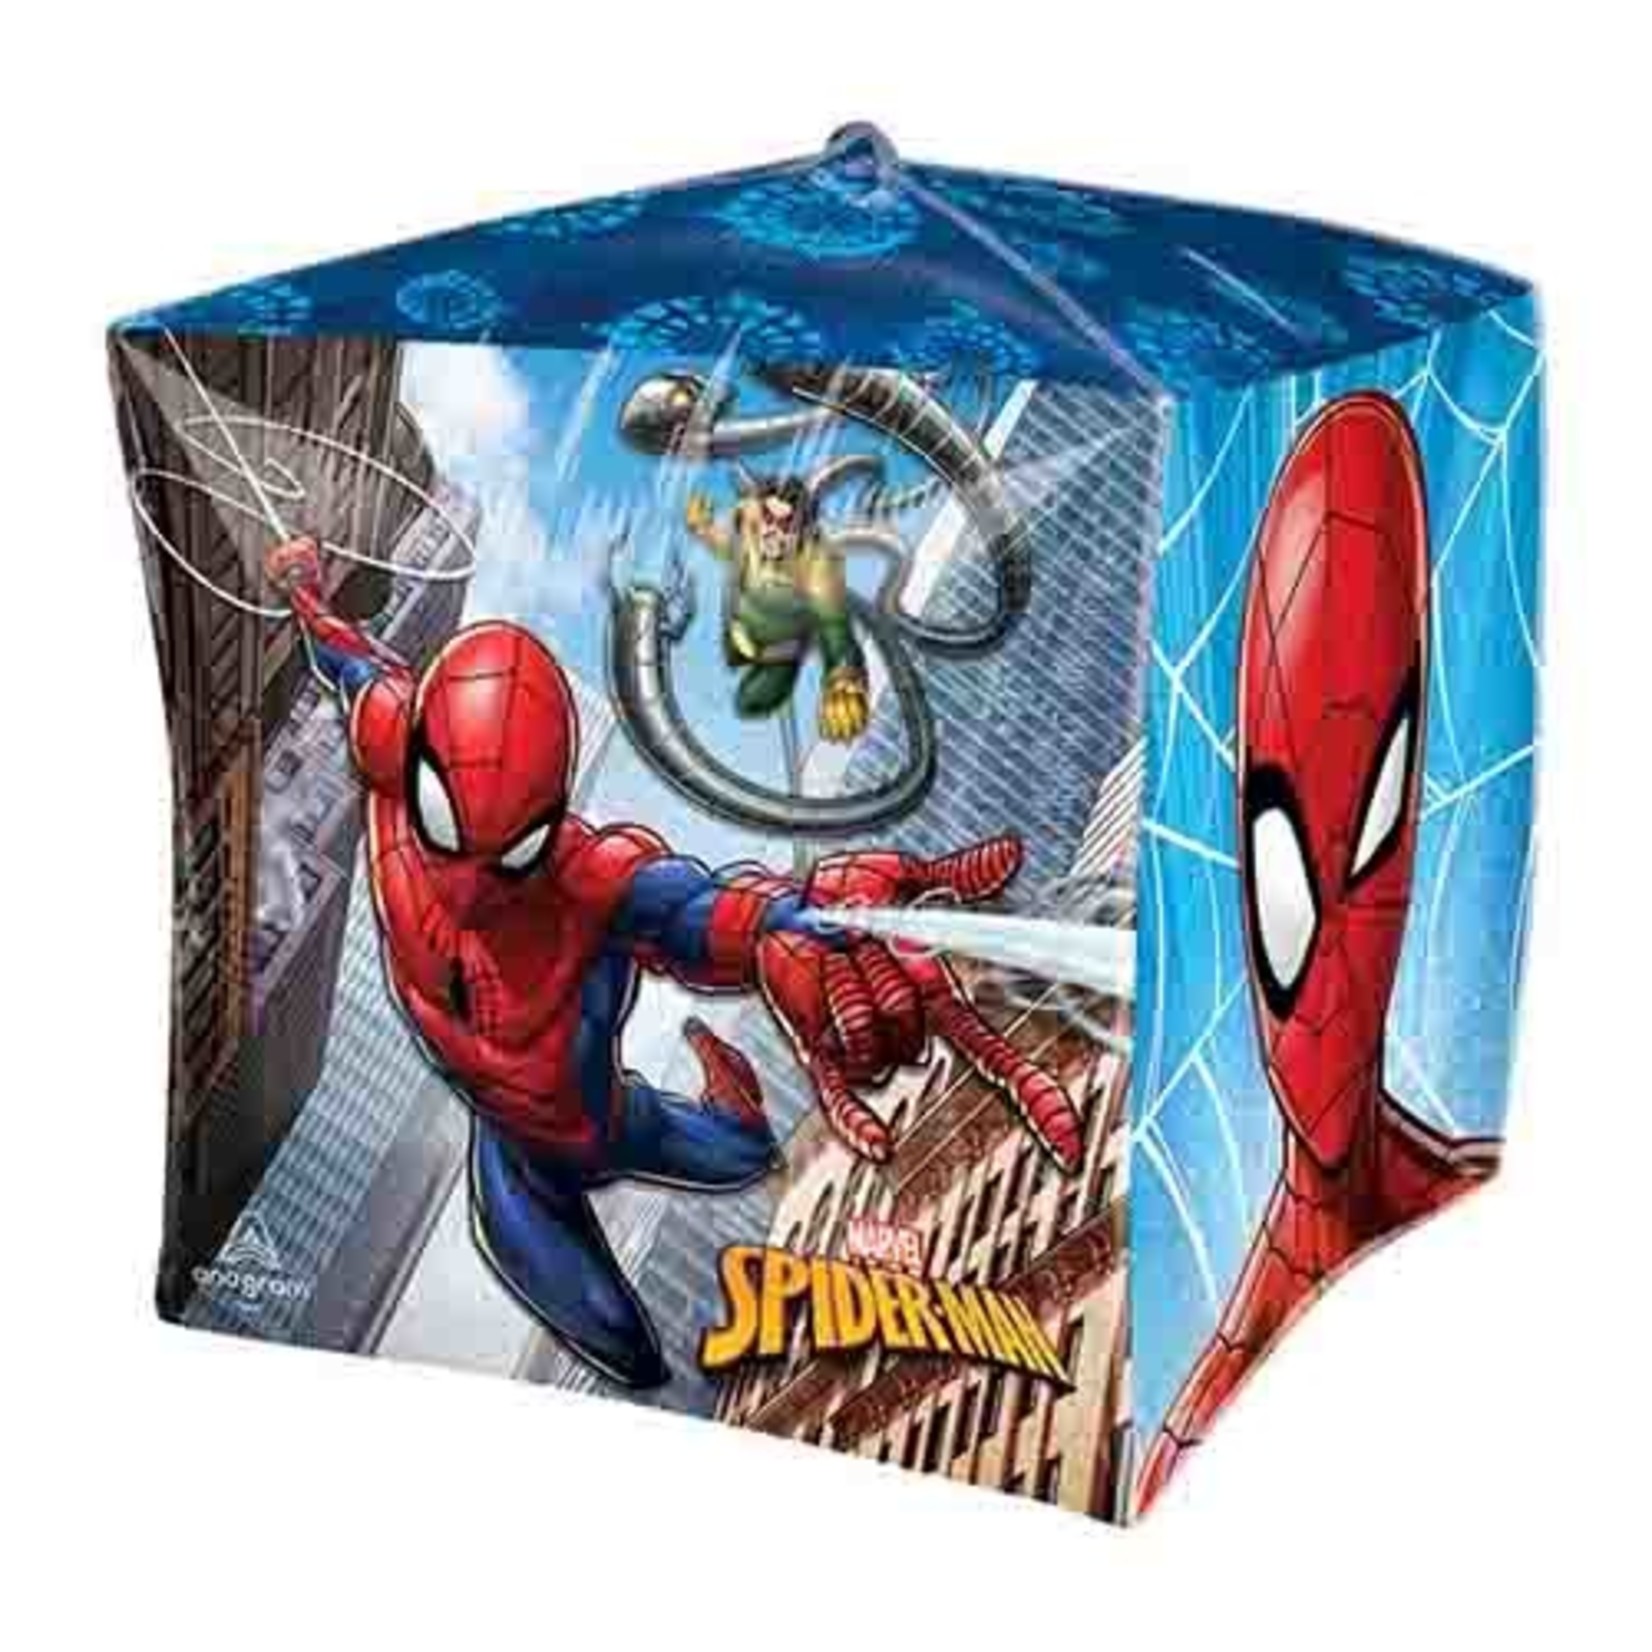 mayflower Spiderman Cubez Shaped Balloon - 1ct.